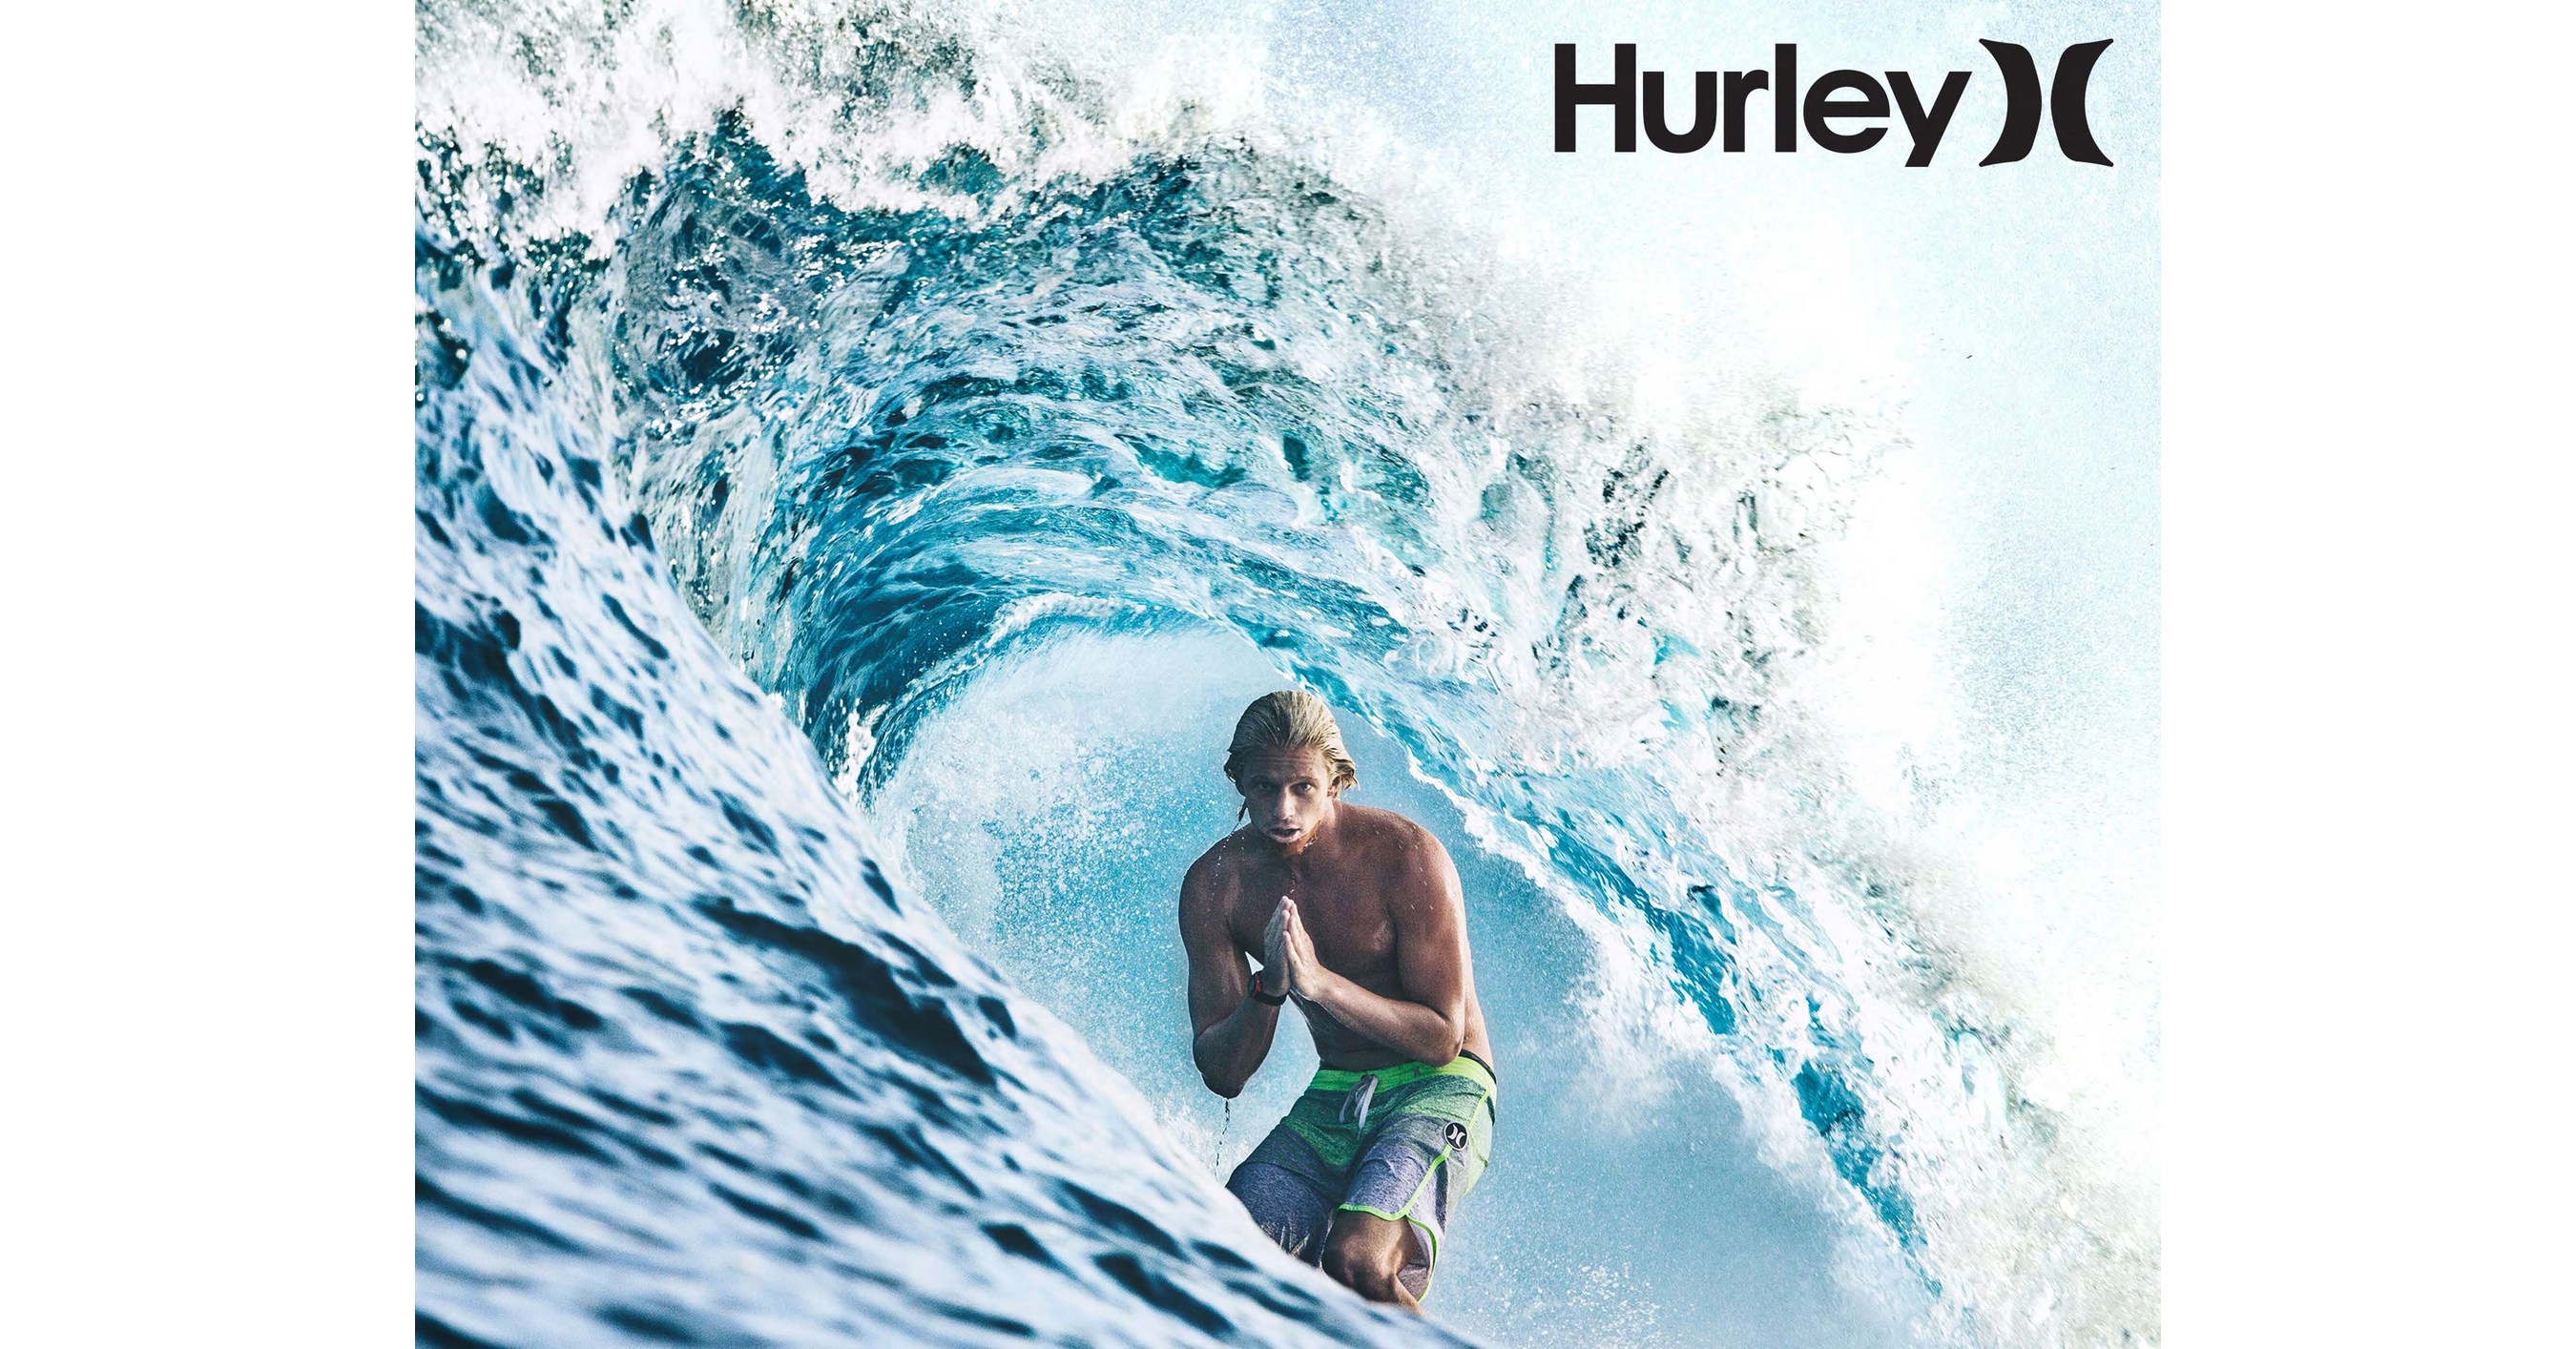 Quedar asombrado Automático Lo encontré Bluestar Alliance Closes Acquisition Of The Hurley Brand